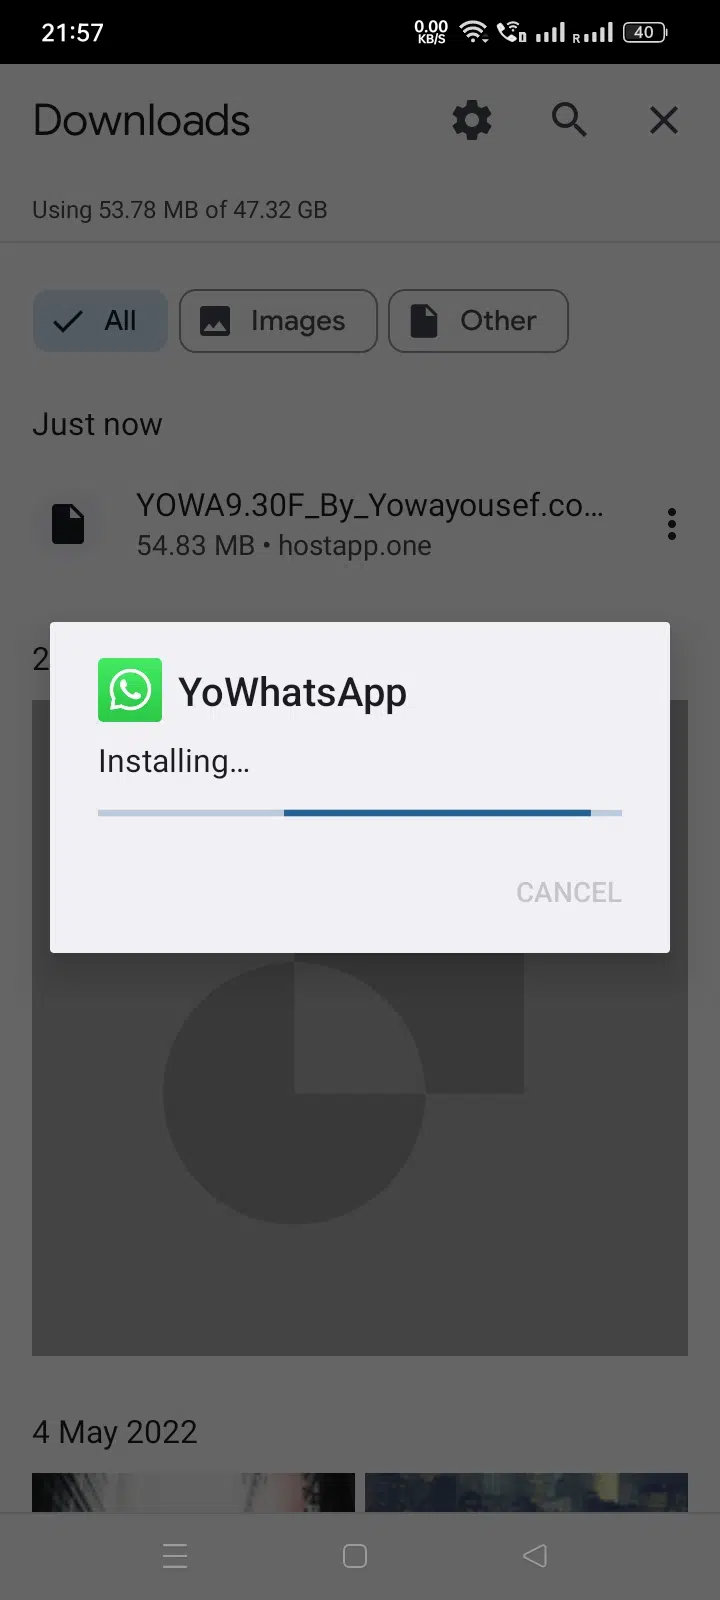 yowhatsapp-installing